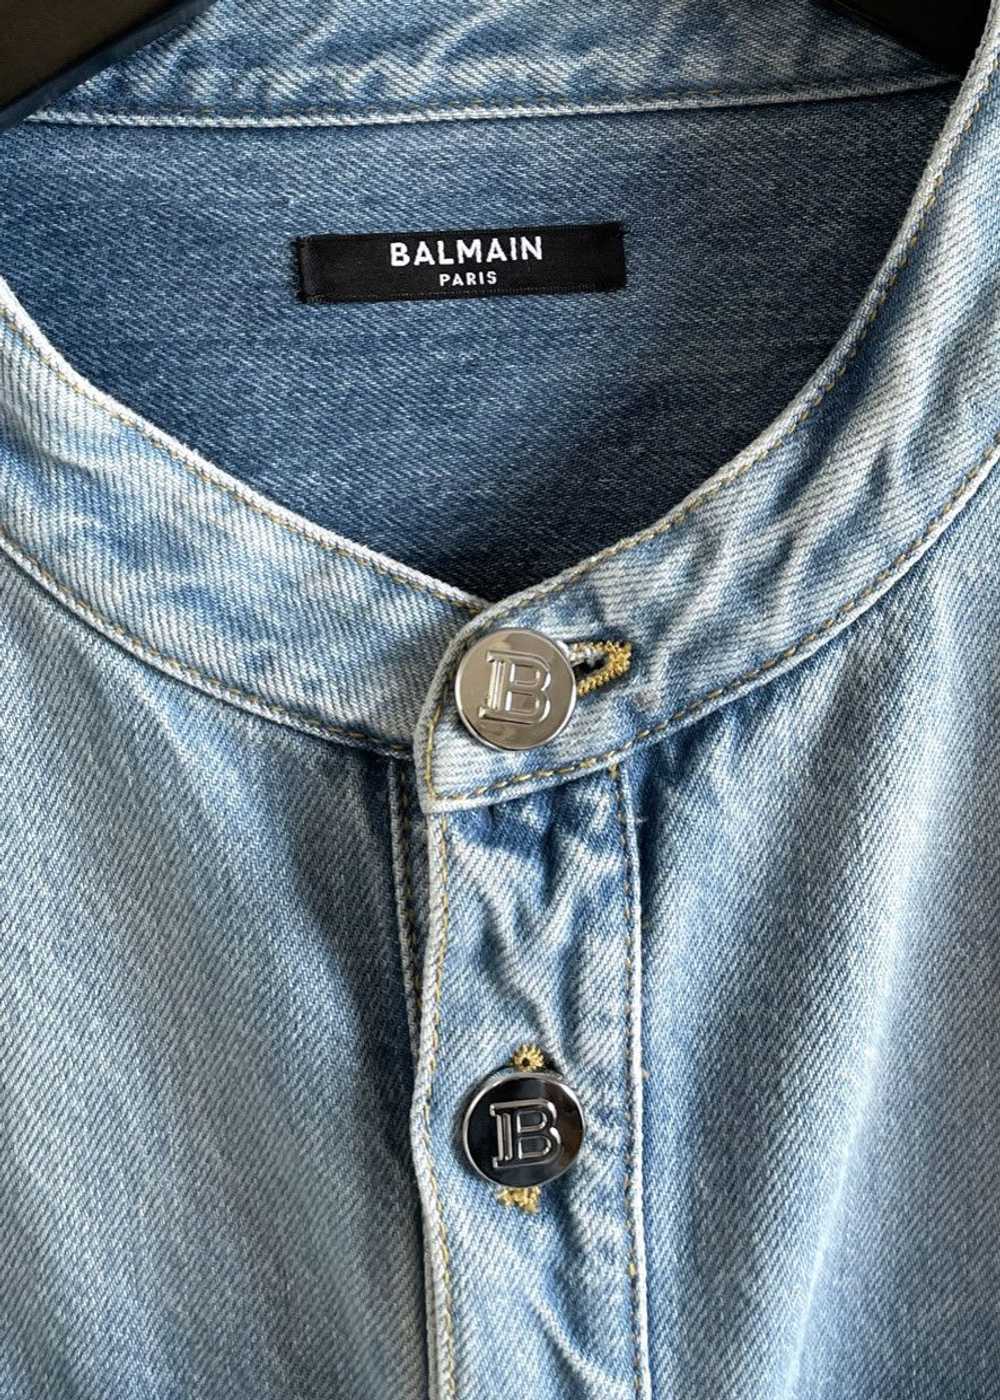 Balmain Balmain Mao Collar Buttoned Denim Shirt - image 3